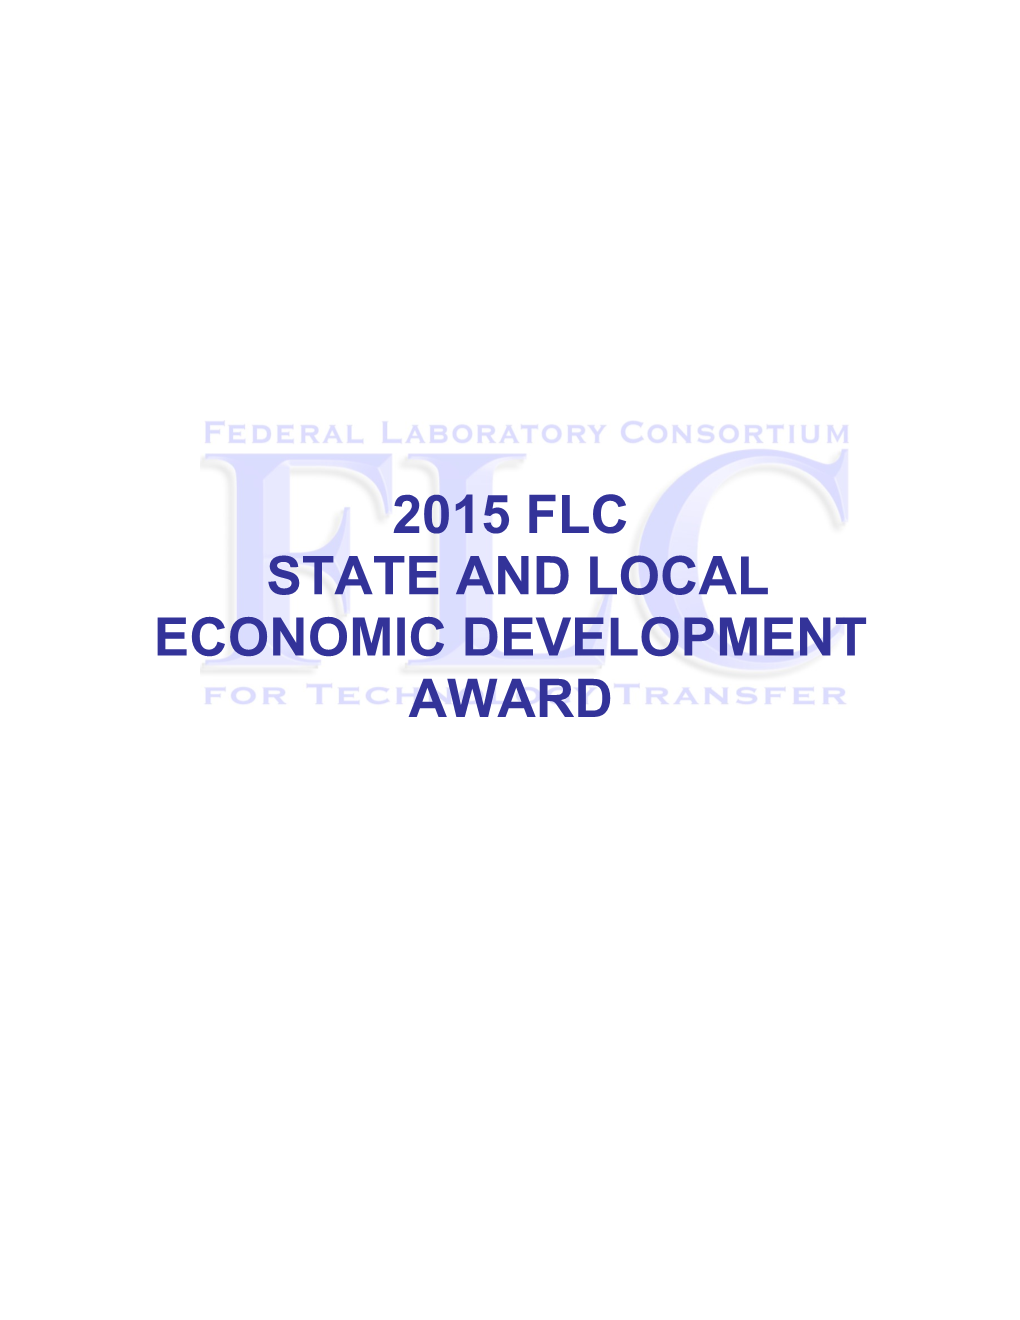 State and Local Economic Development Award